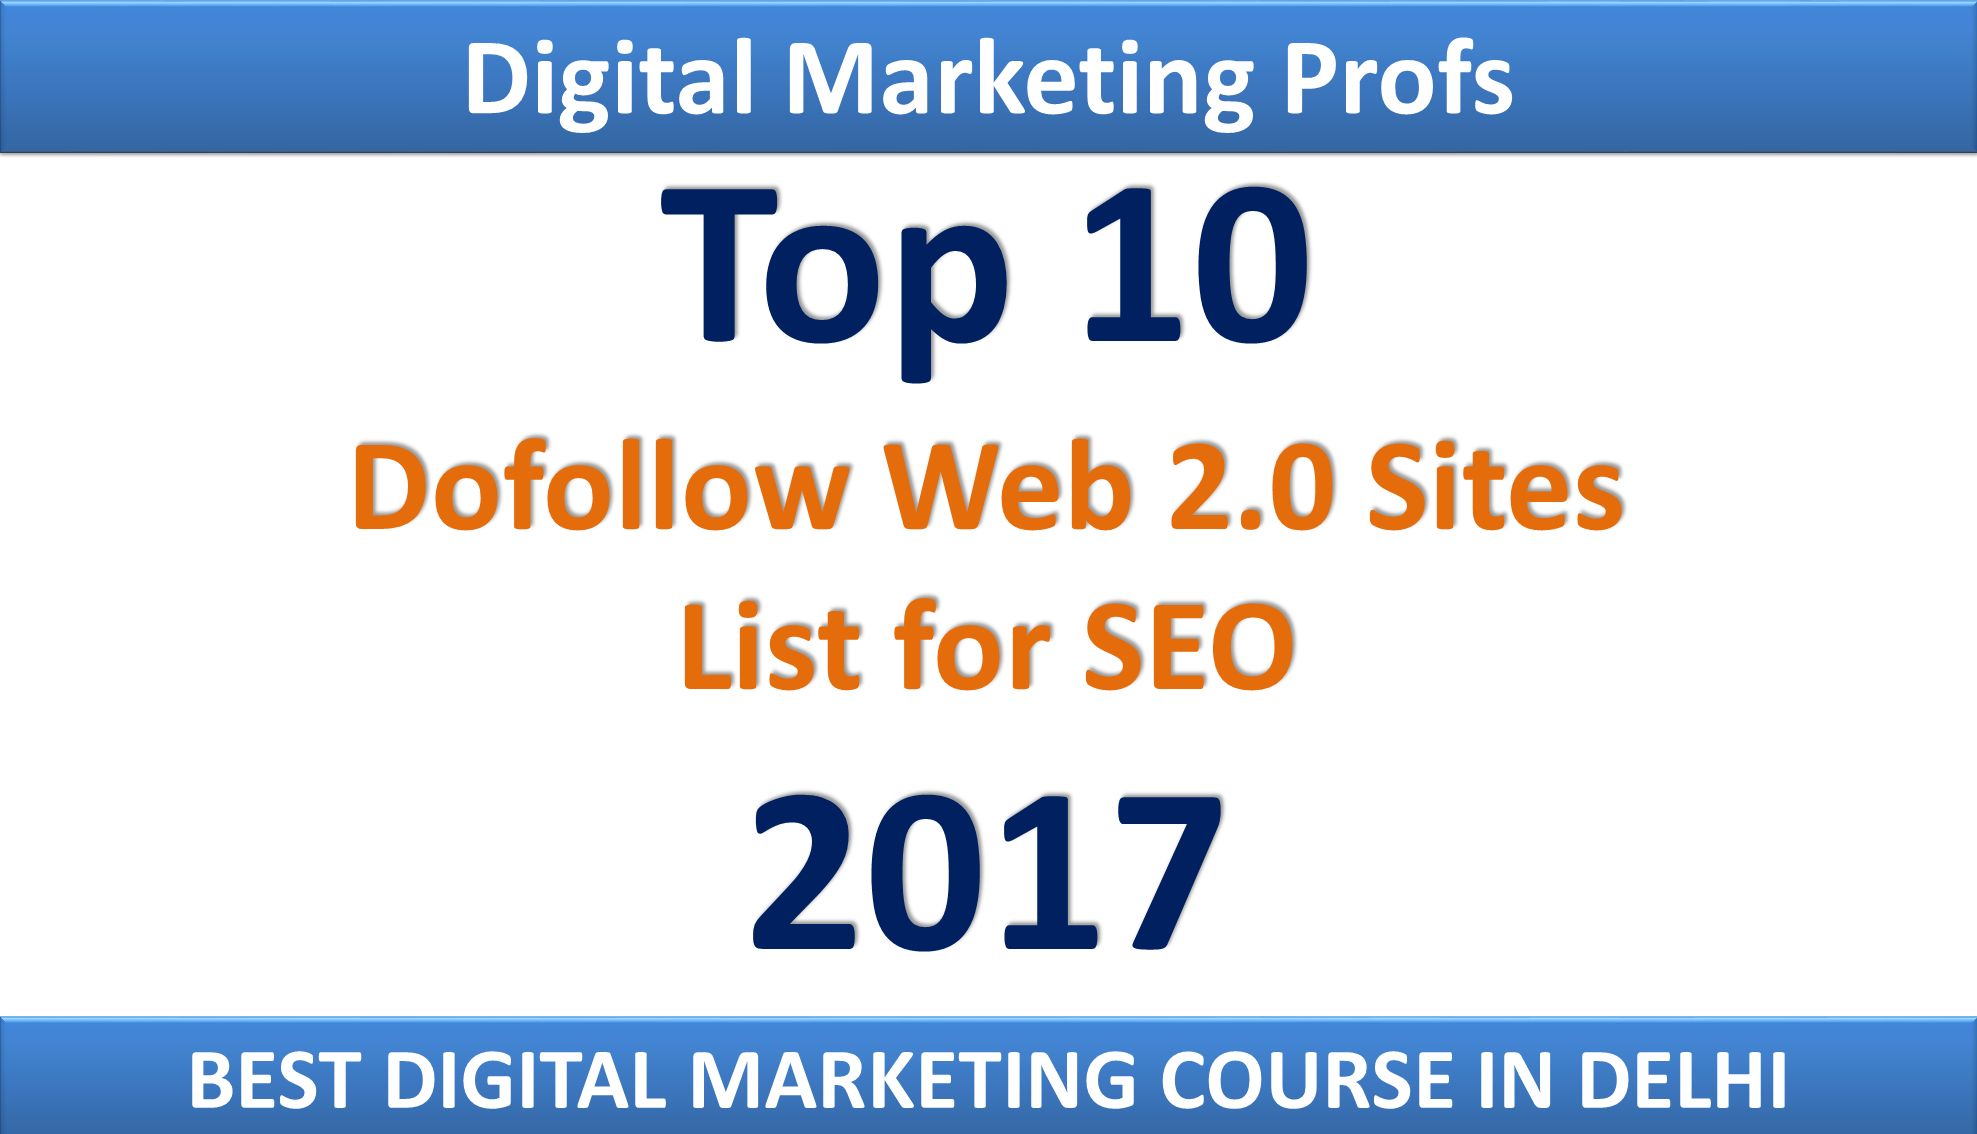 Top 10 Dofollow Web 2.0 Sites List for SEO 2017 Top 10 Dofollow Web 2.0 Sites List for SEO 2017 Digital Marketing Profs BEST DIGITAL MARKETING COURSE IN DELHI